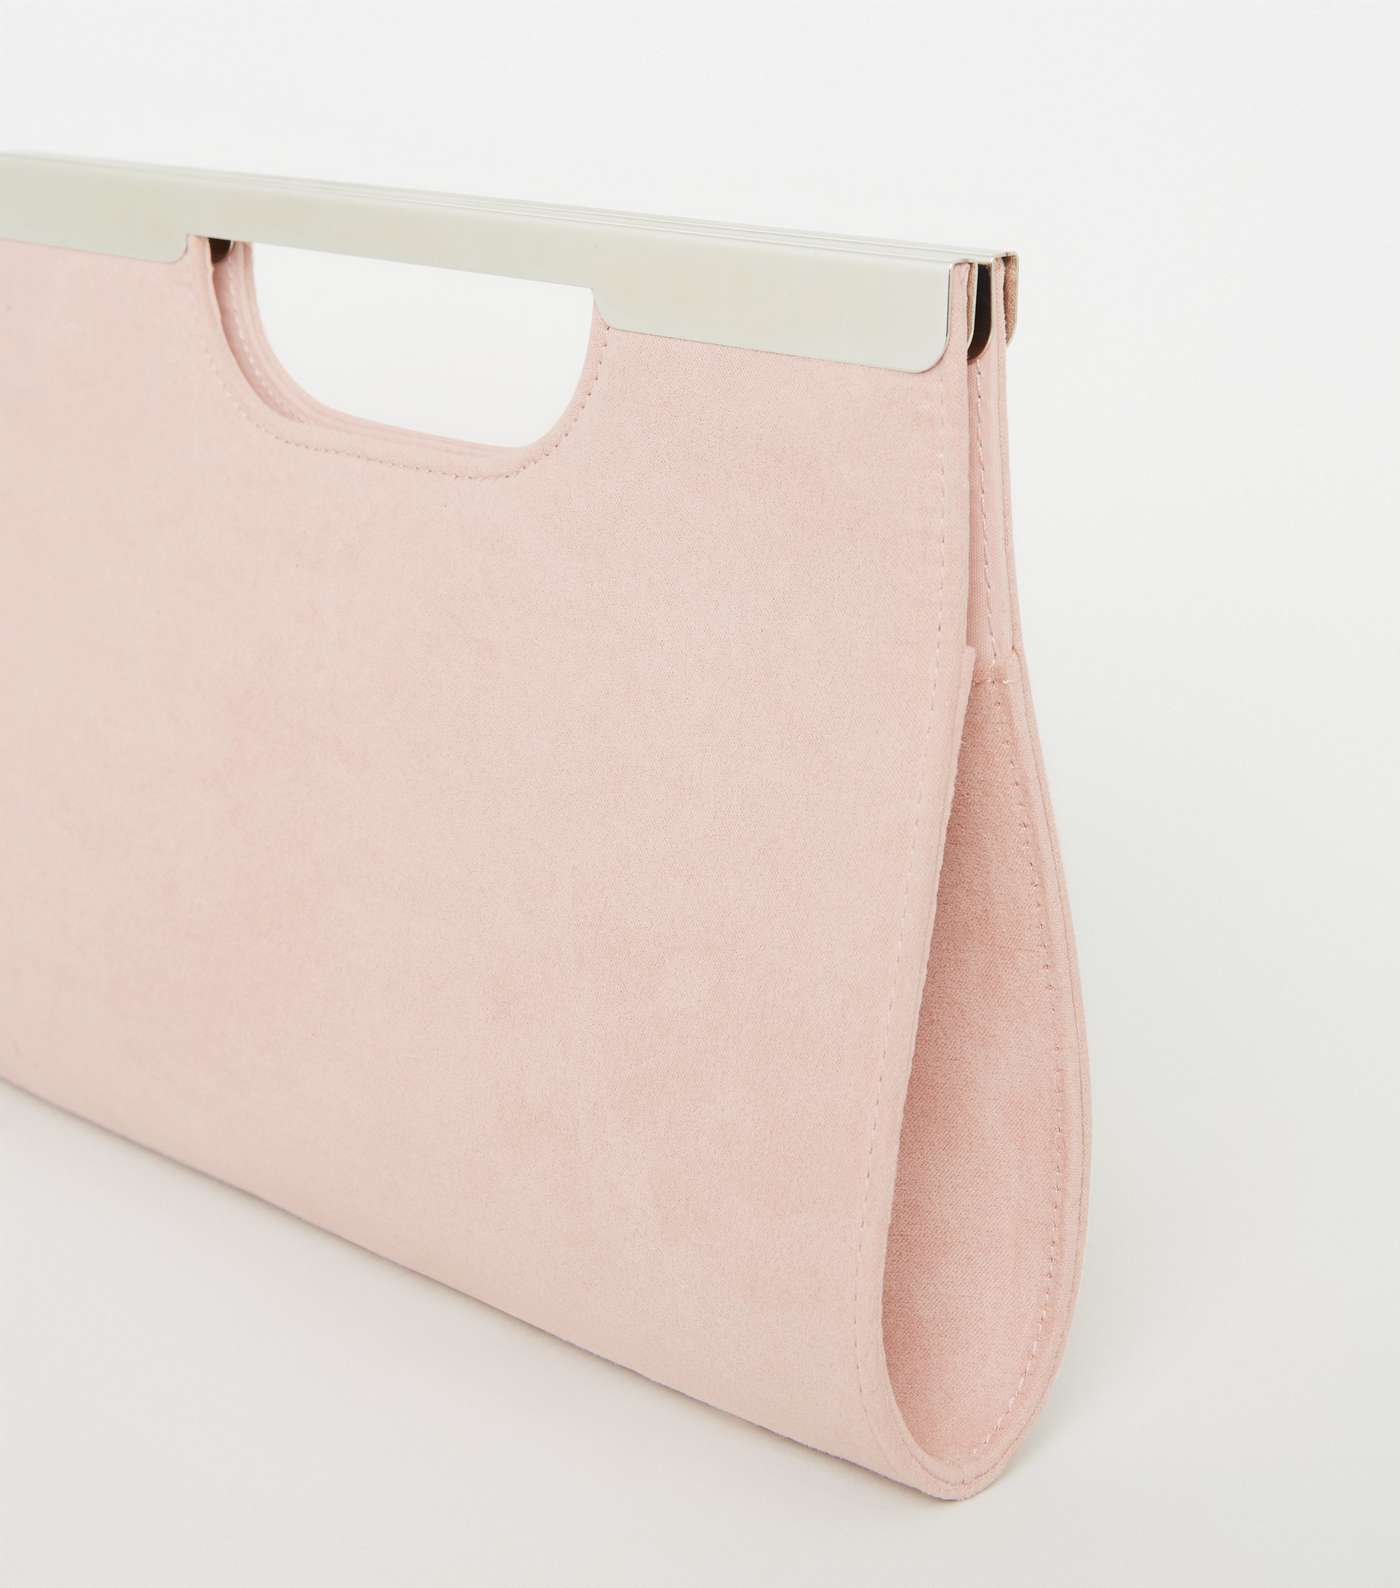 Pale Pink Suedette Clutch Bag Image 3